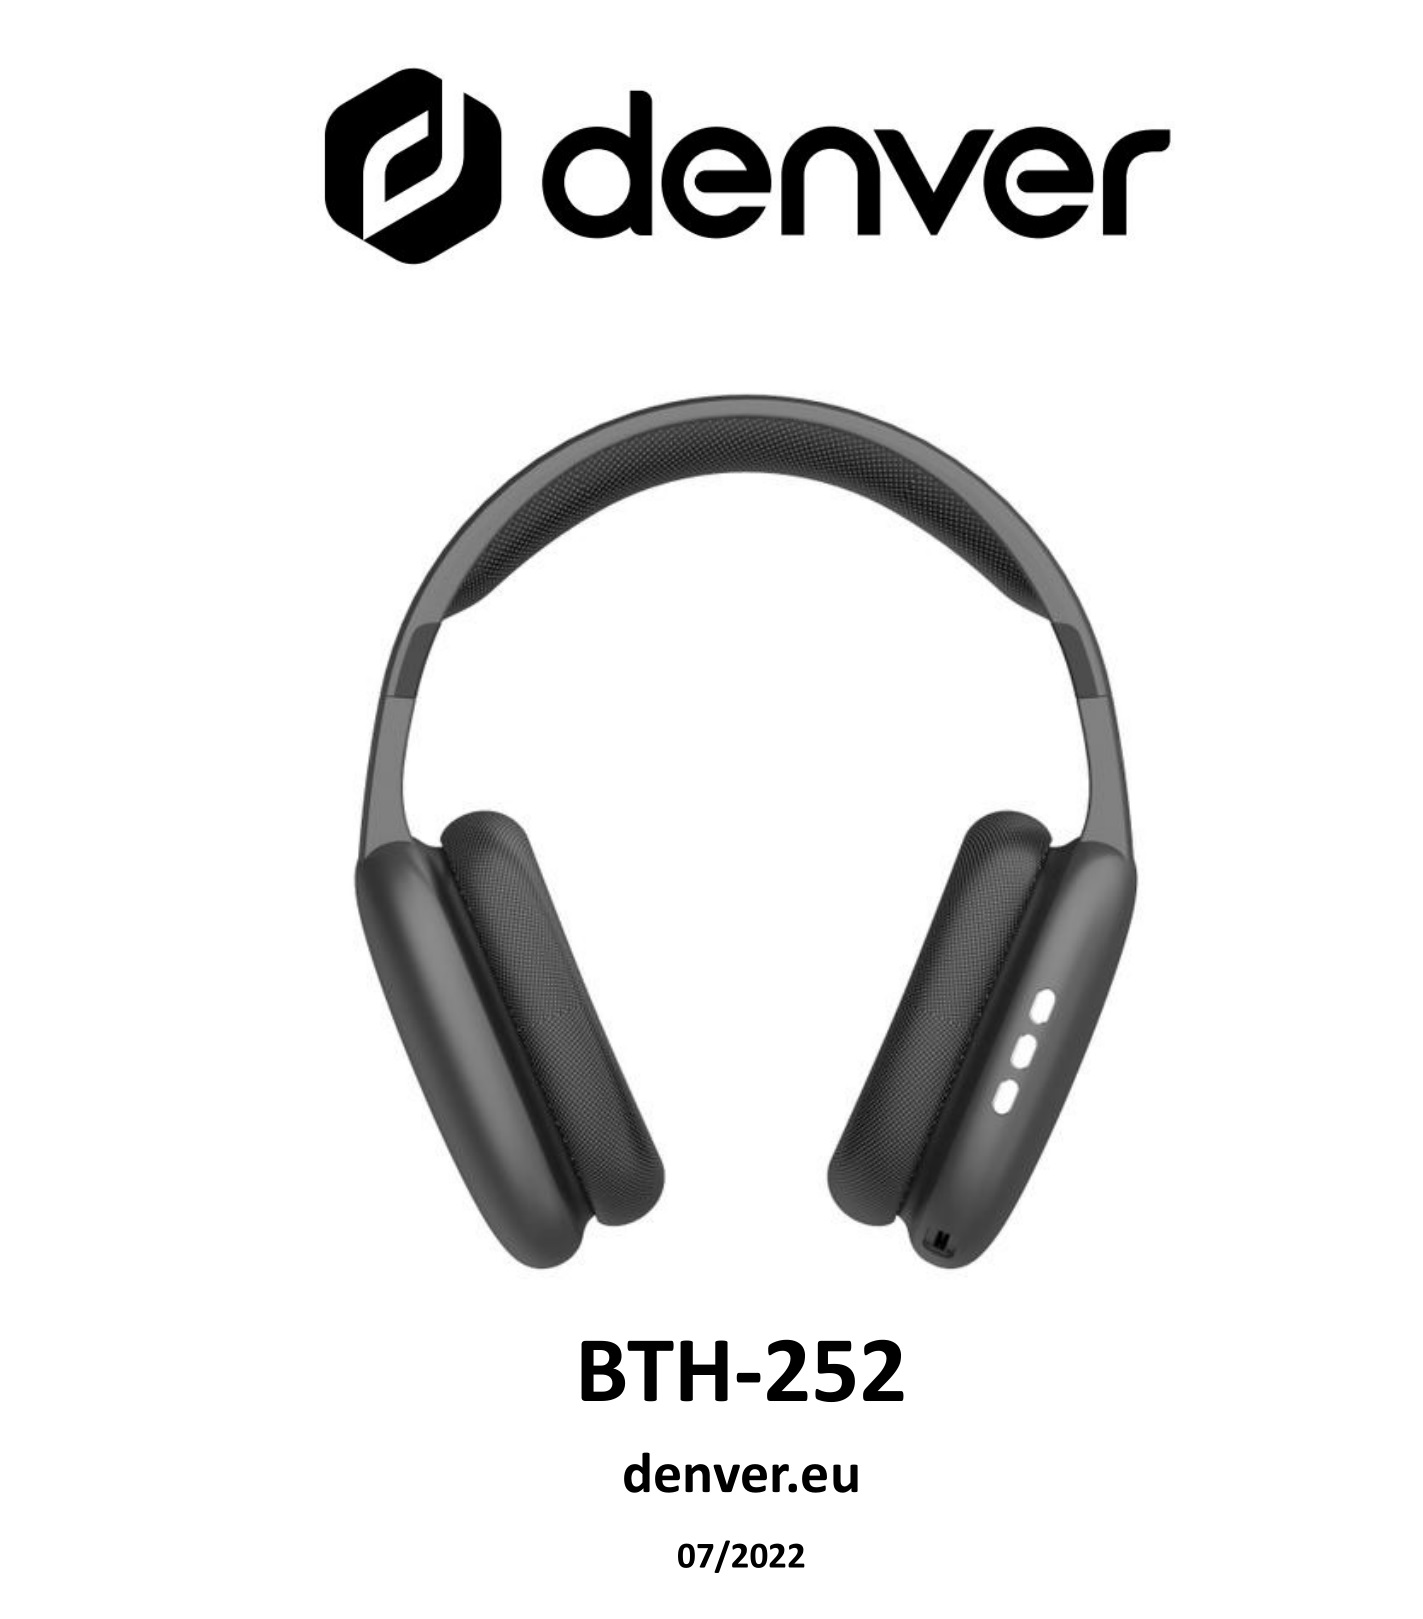 DENVER BTH-252 Bluetooth Headphone User Manual